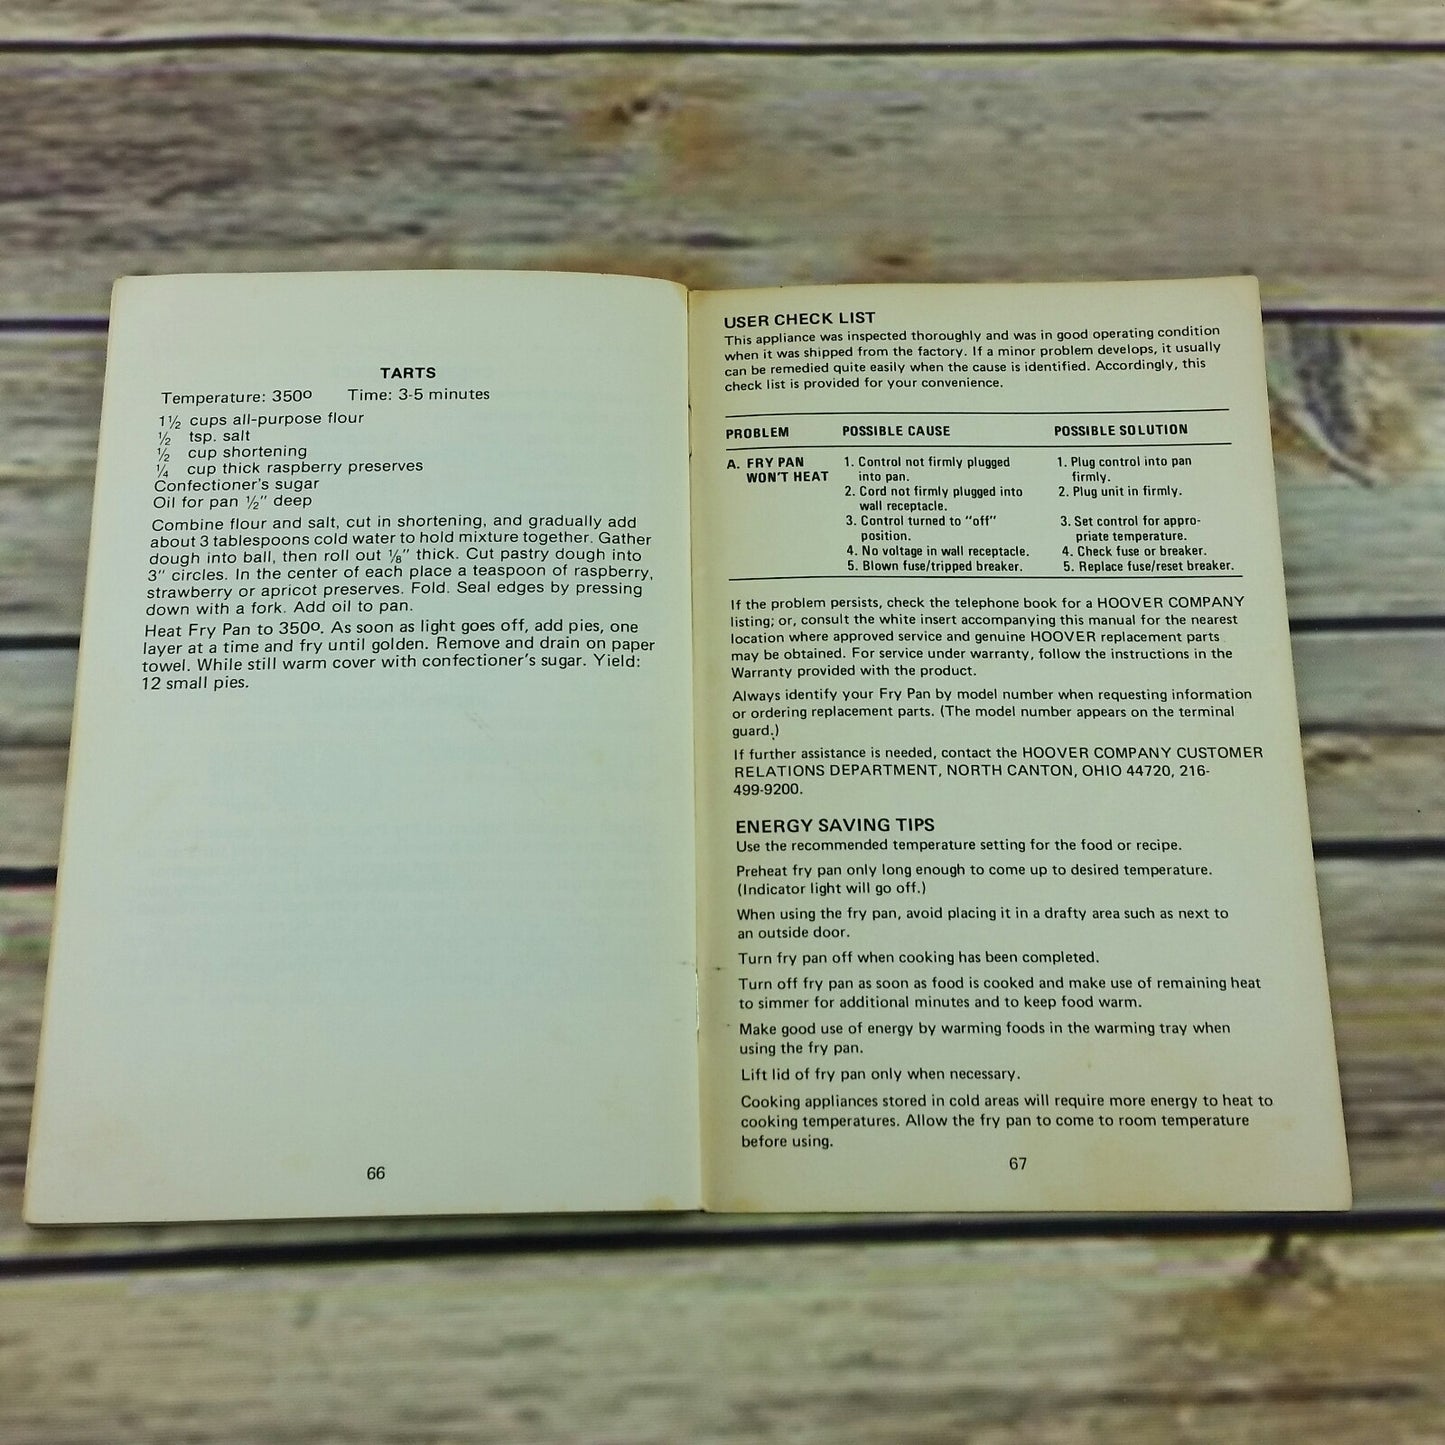 Vintage Cookbook Nesco Broiler Lid Fry Pan Cooking Recipes Promo 1973 Manual Booklet - At Grandma's Table